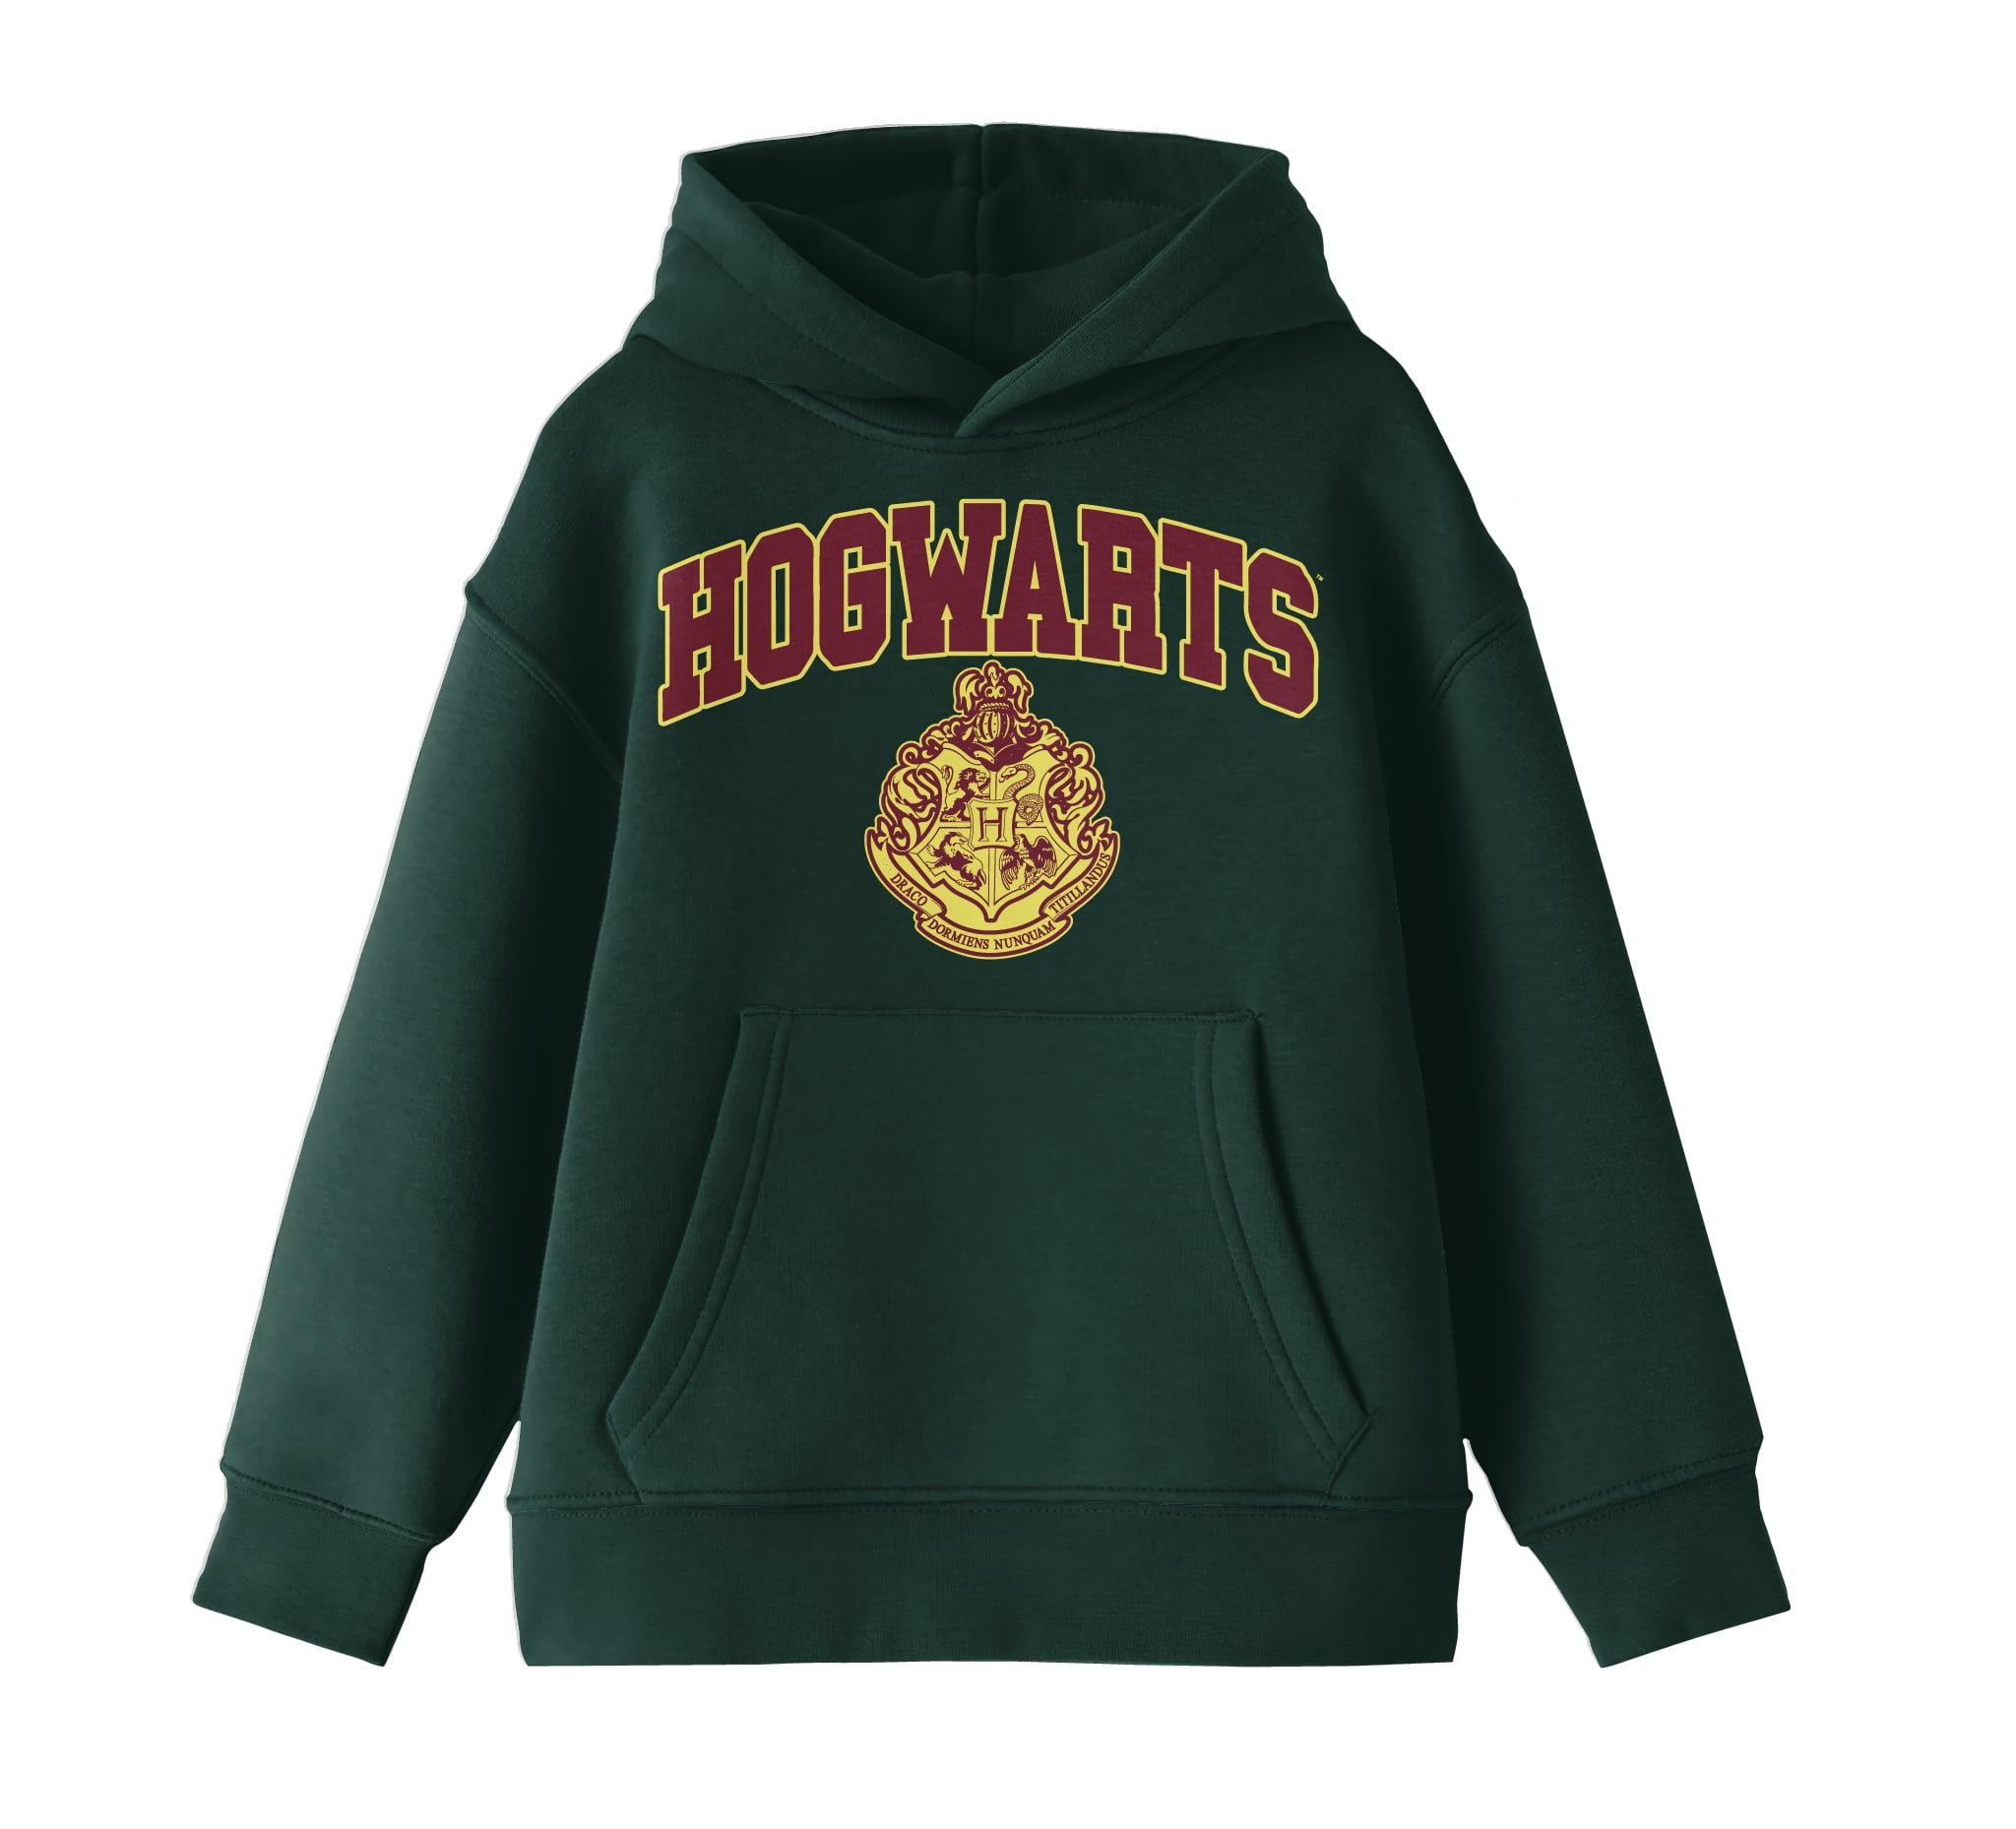 Harry Hogwarts Text & Crest Logo Youth Boys Green Print Hoodie- S -